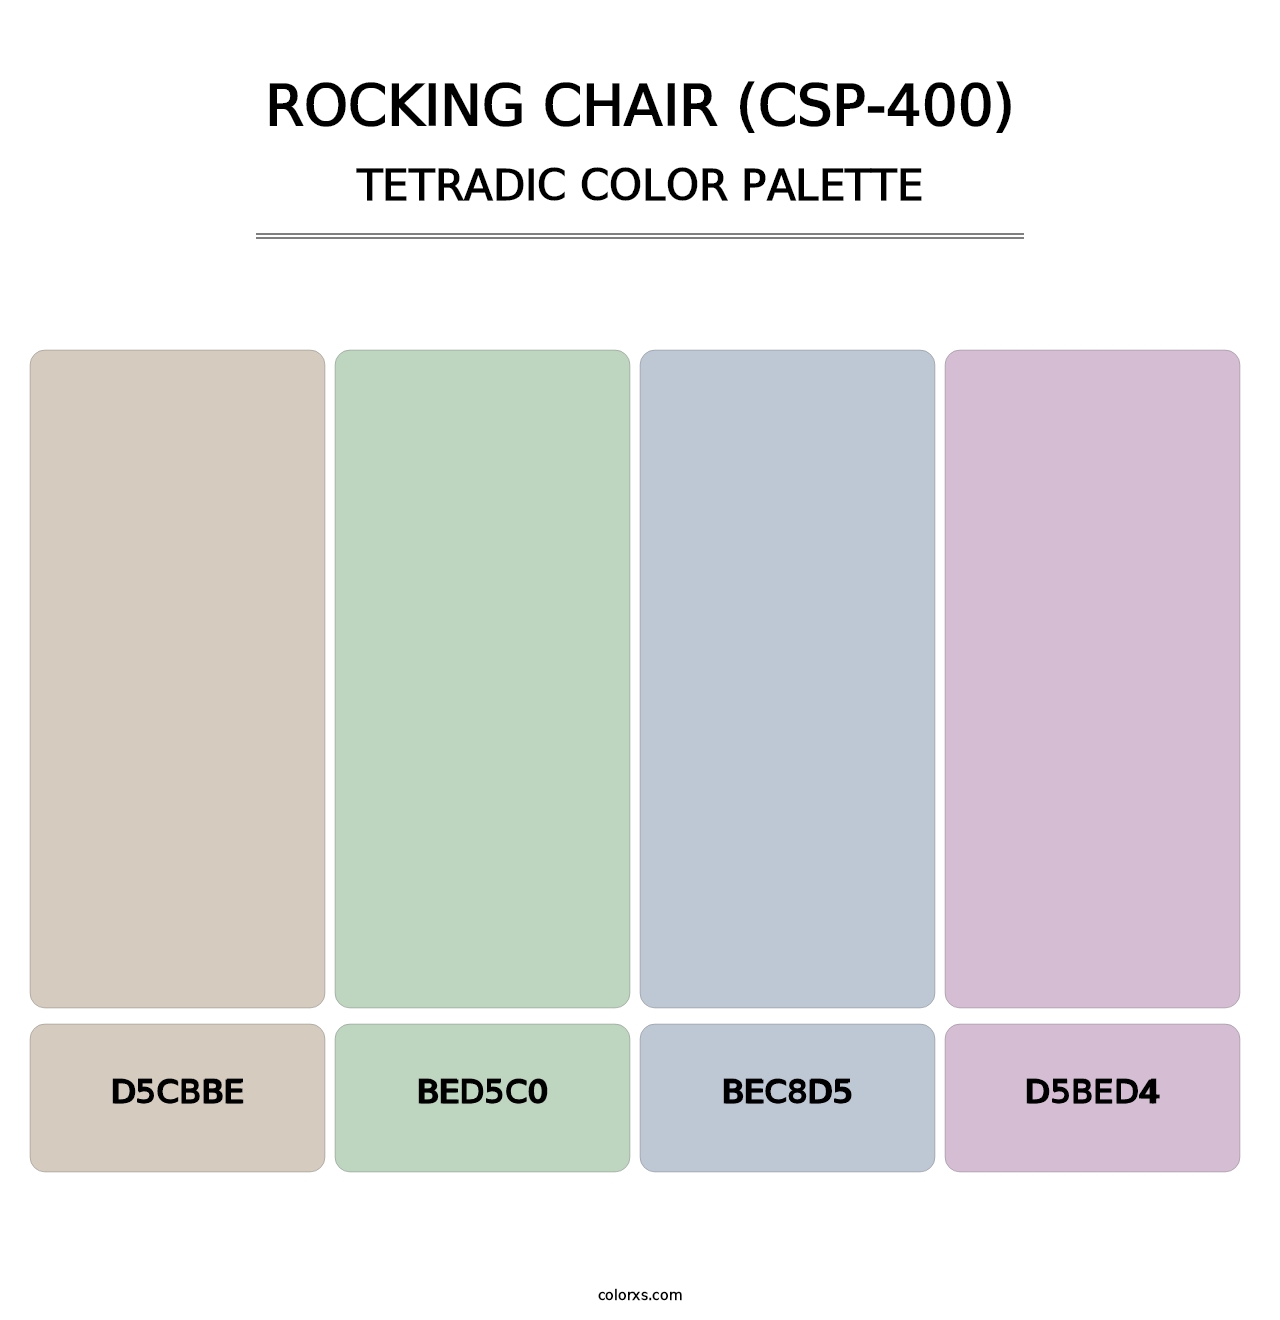 Rocking Chair (CSP-400) - Tetradic Color Palette